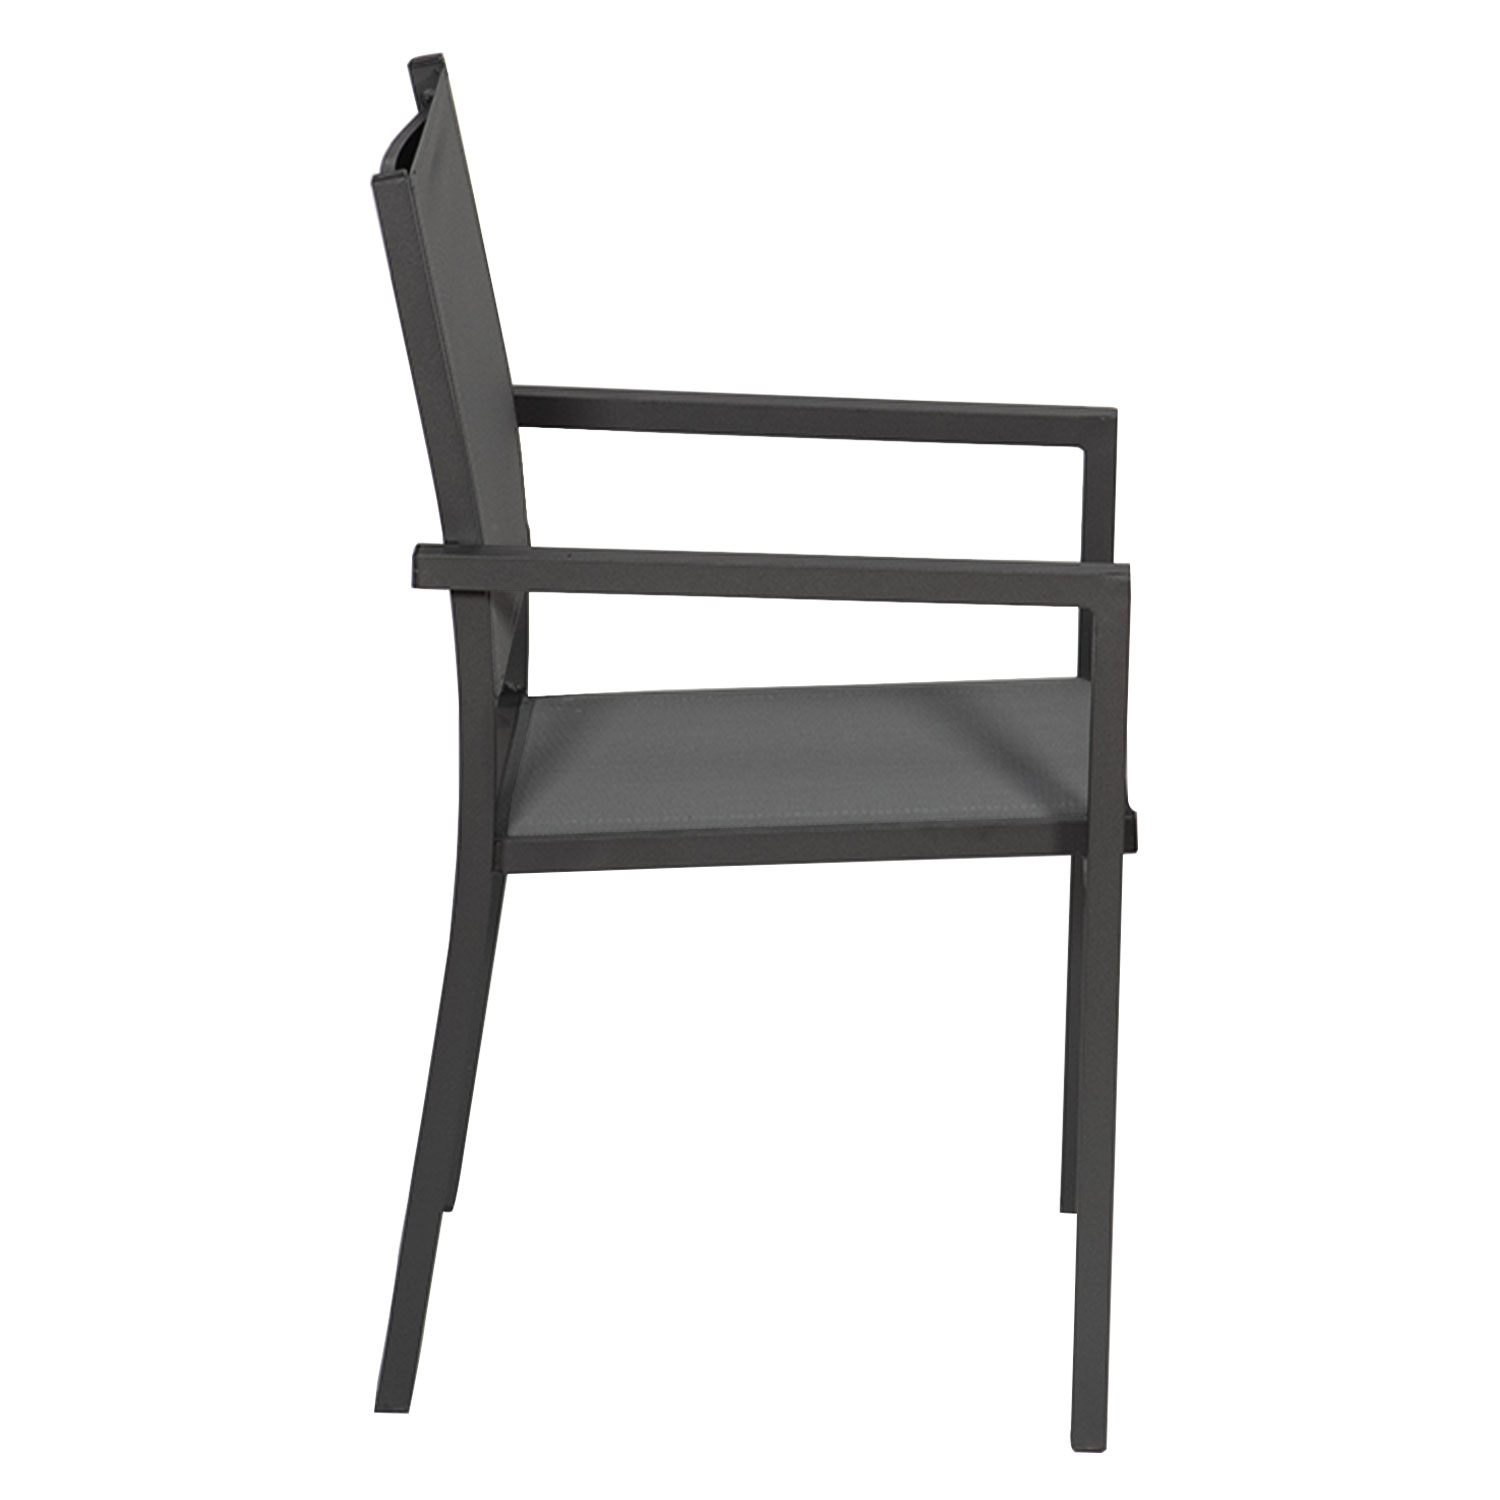 Juego de 8 sillas de aluminio antracita - textileno gris